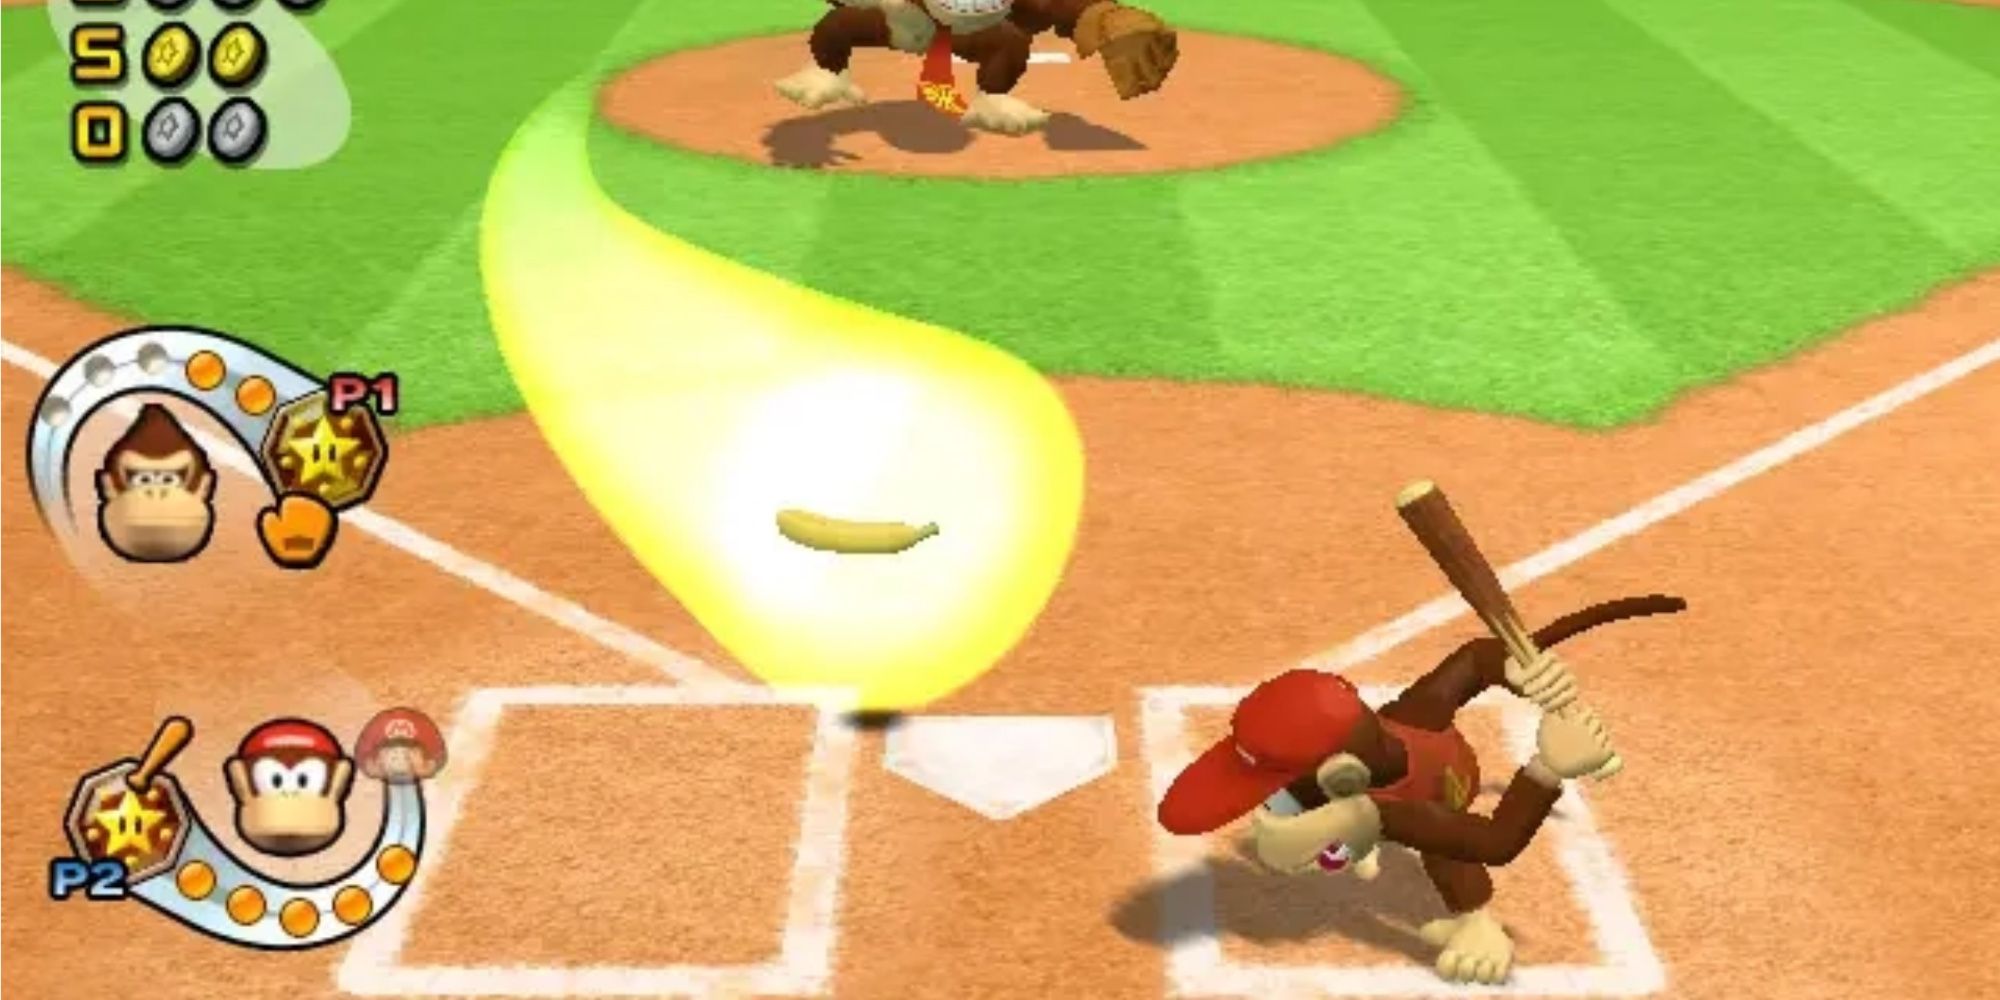 Batting as Diddy Kong in Mario Superstar Baseball